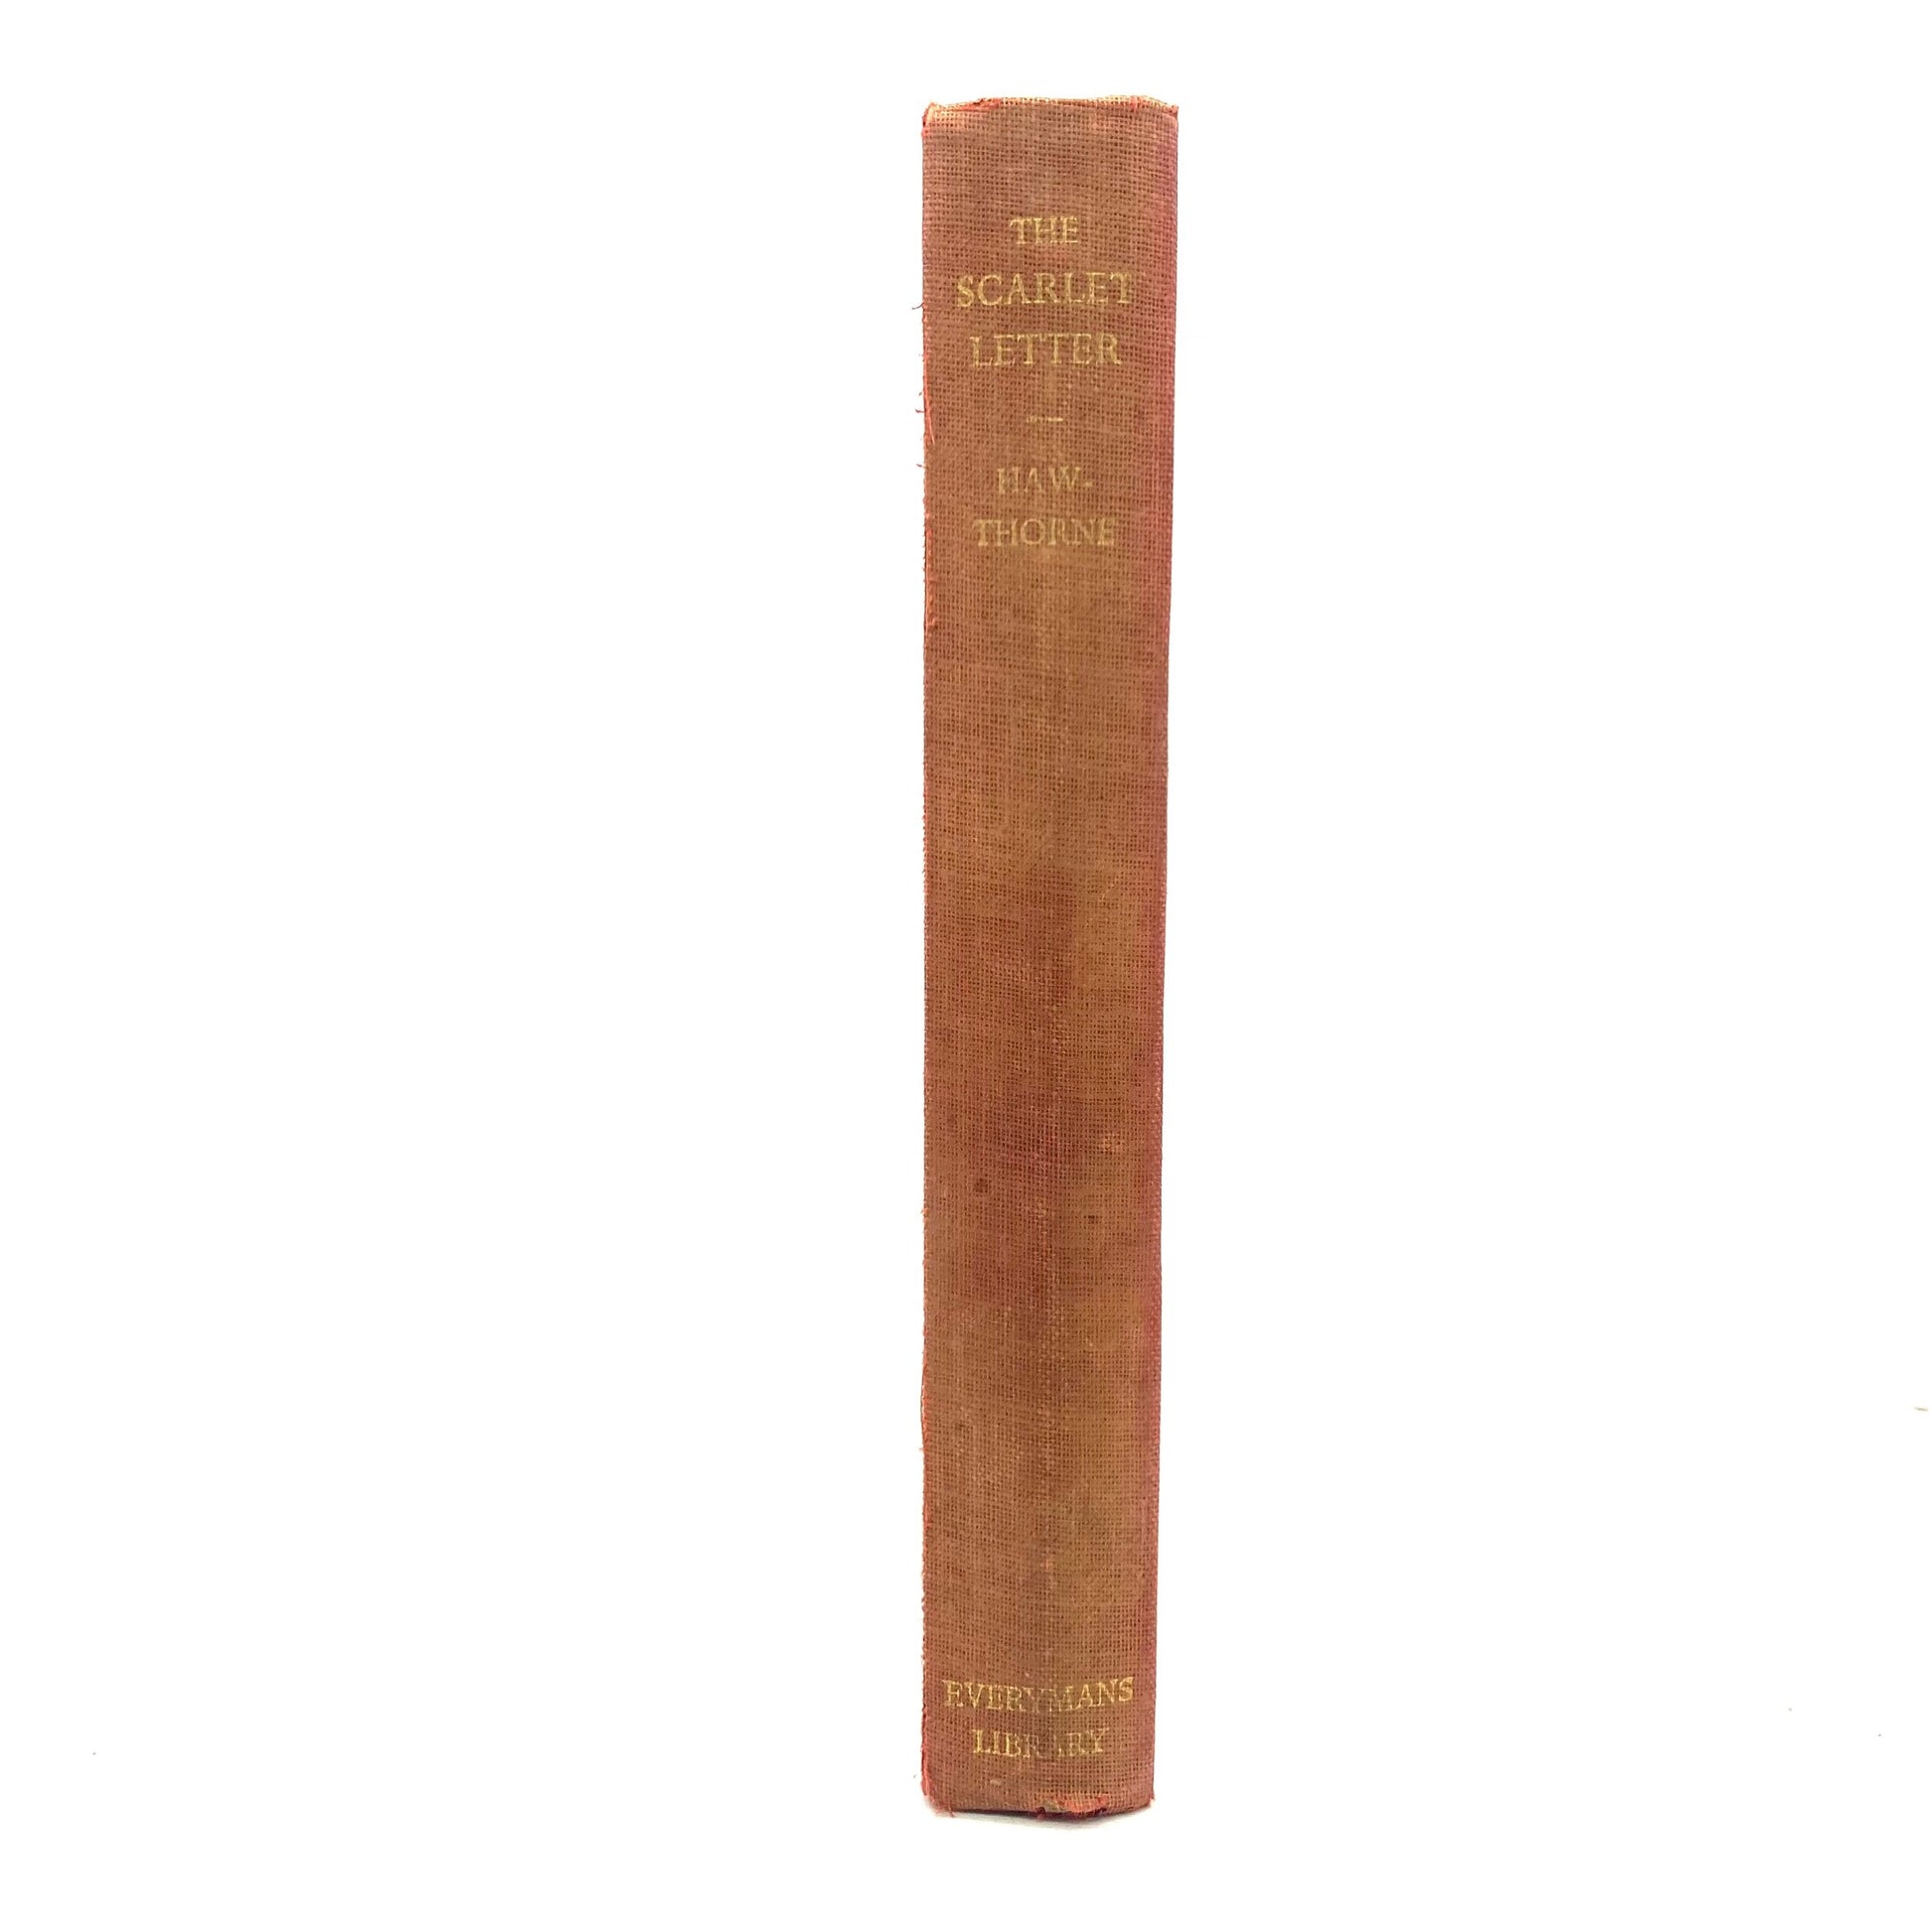 HAWTHORNE, Nathaniel "The Scarlet Letter" [JM Dent, 1938] - Buzz Bookstore